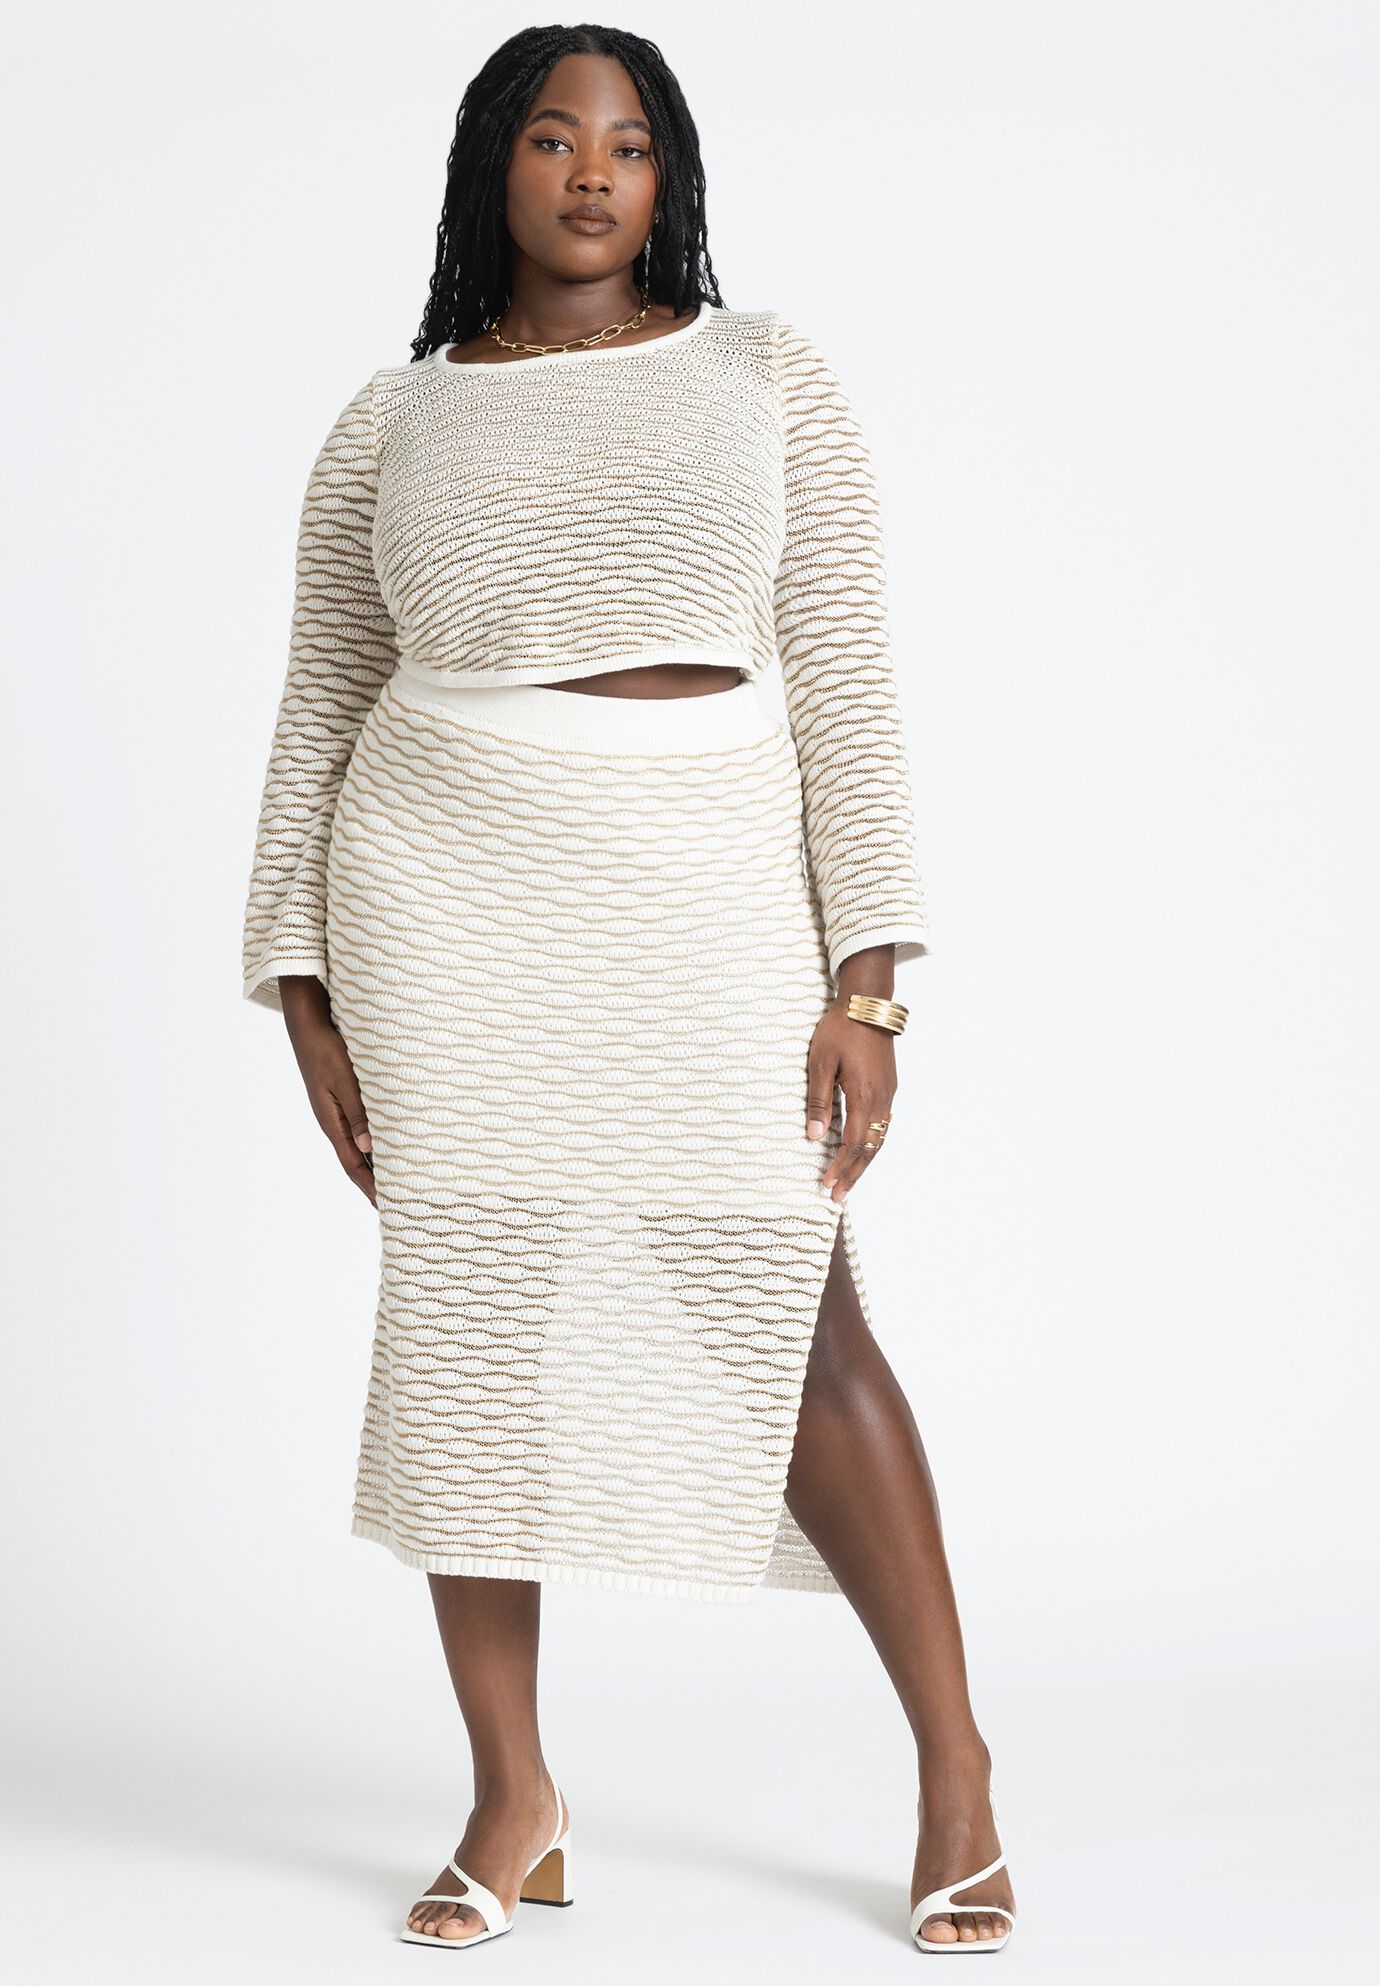 Plus Size Women Novelty Knit Maxi Skirt By (size 30/32)